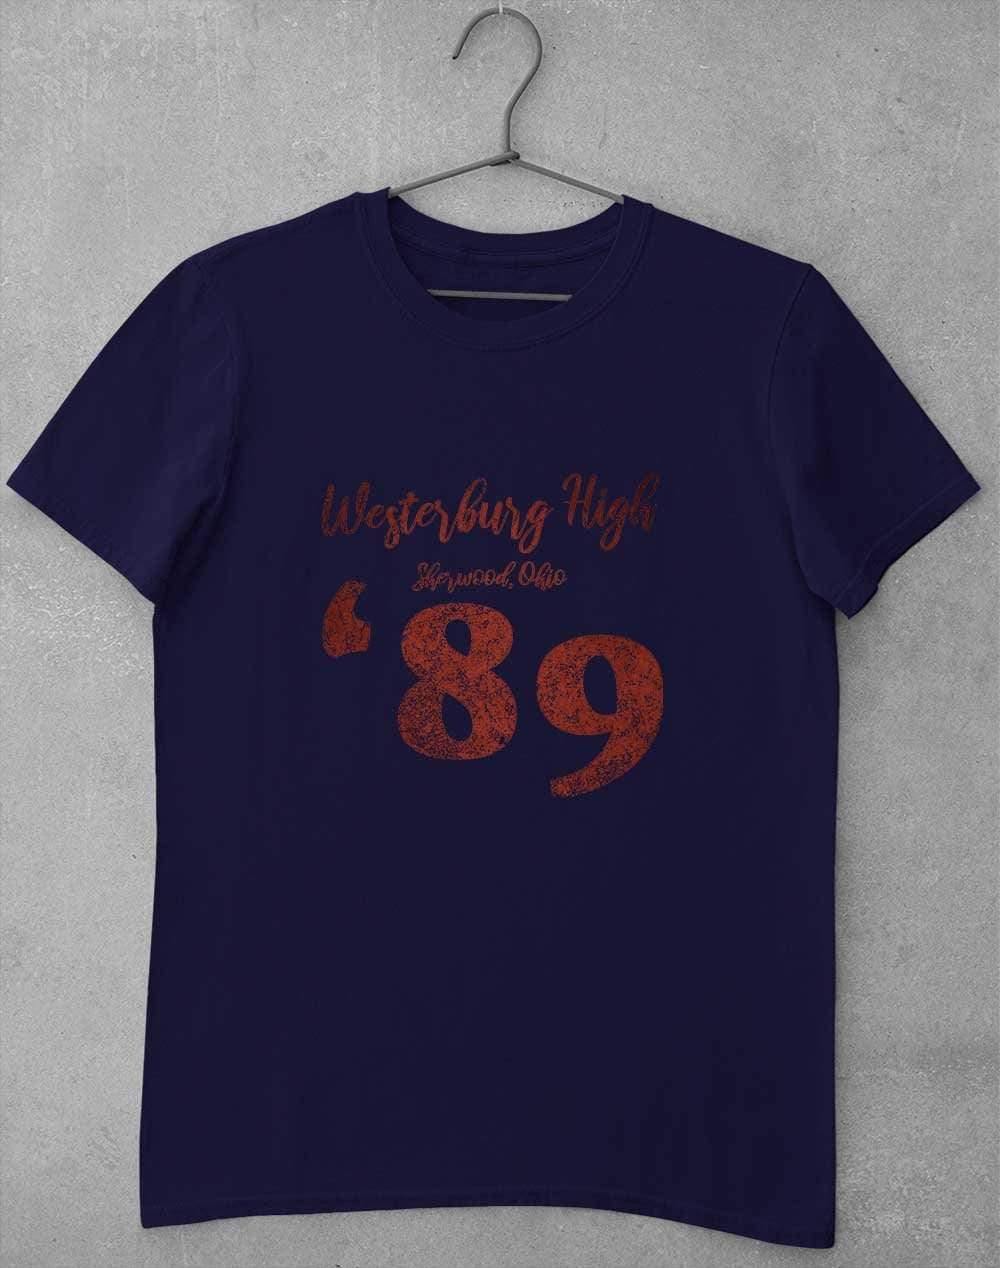 Westerburg High School 1989 Retro T-Shirt S / Navy  - Off World Tees